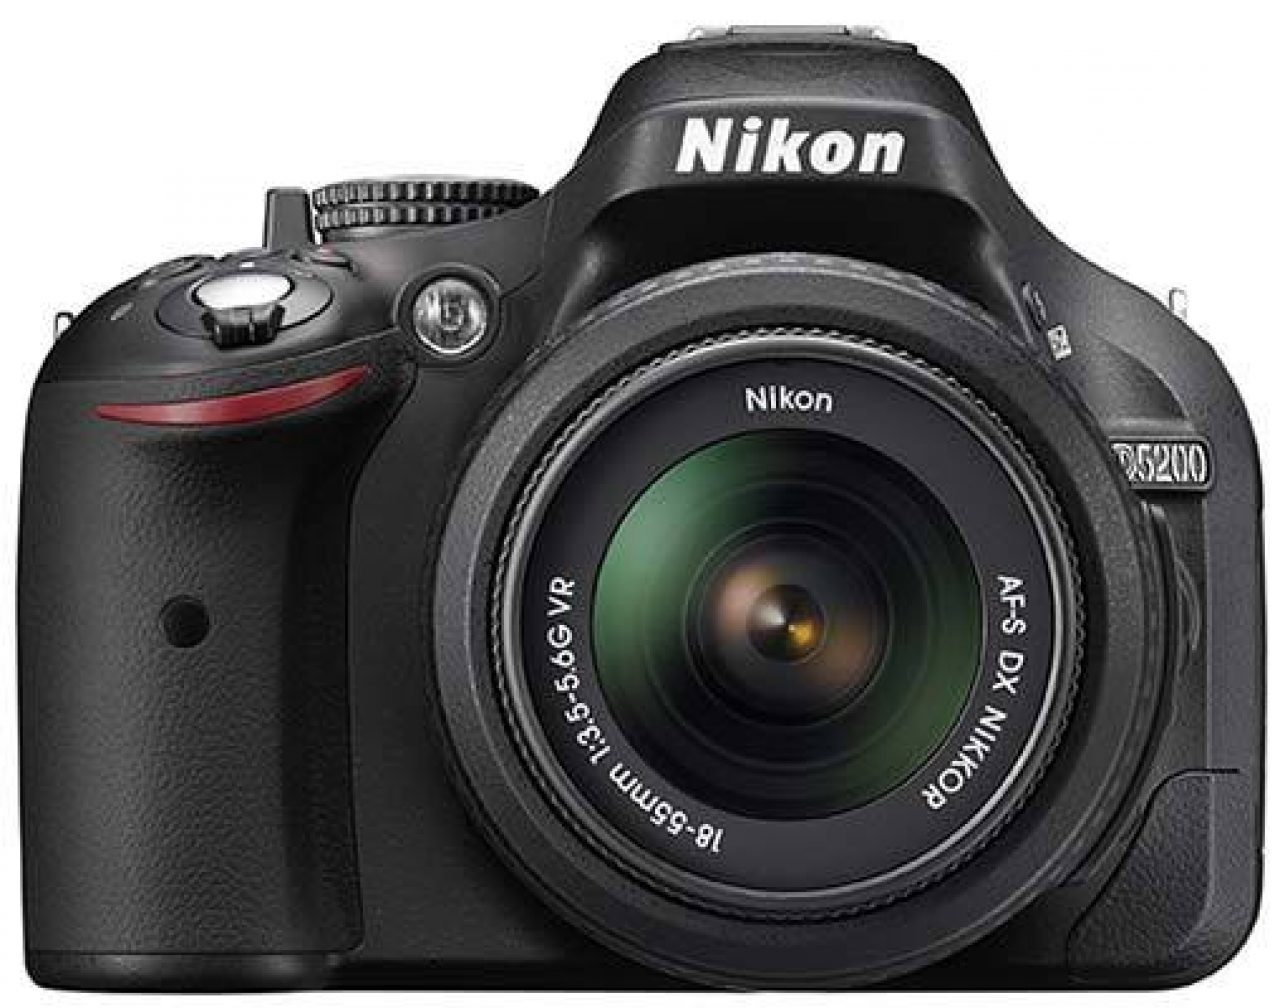 barsten ambitie kathedraal Nikon D5200 Review | Photography Blog